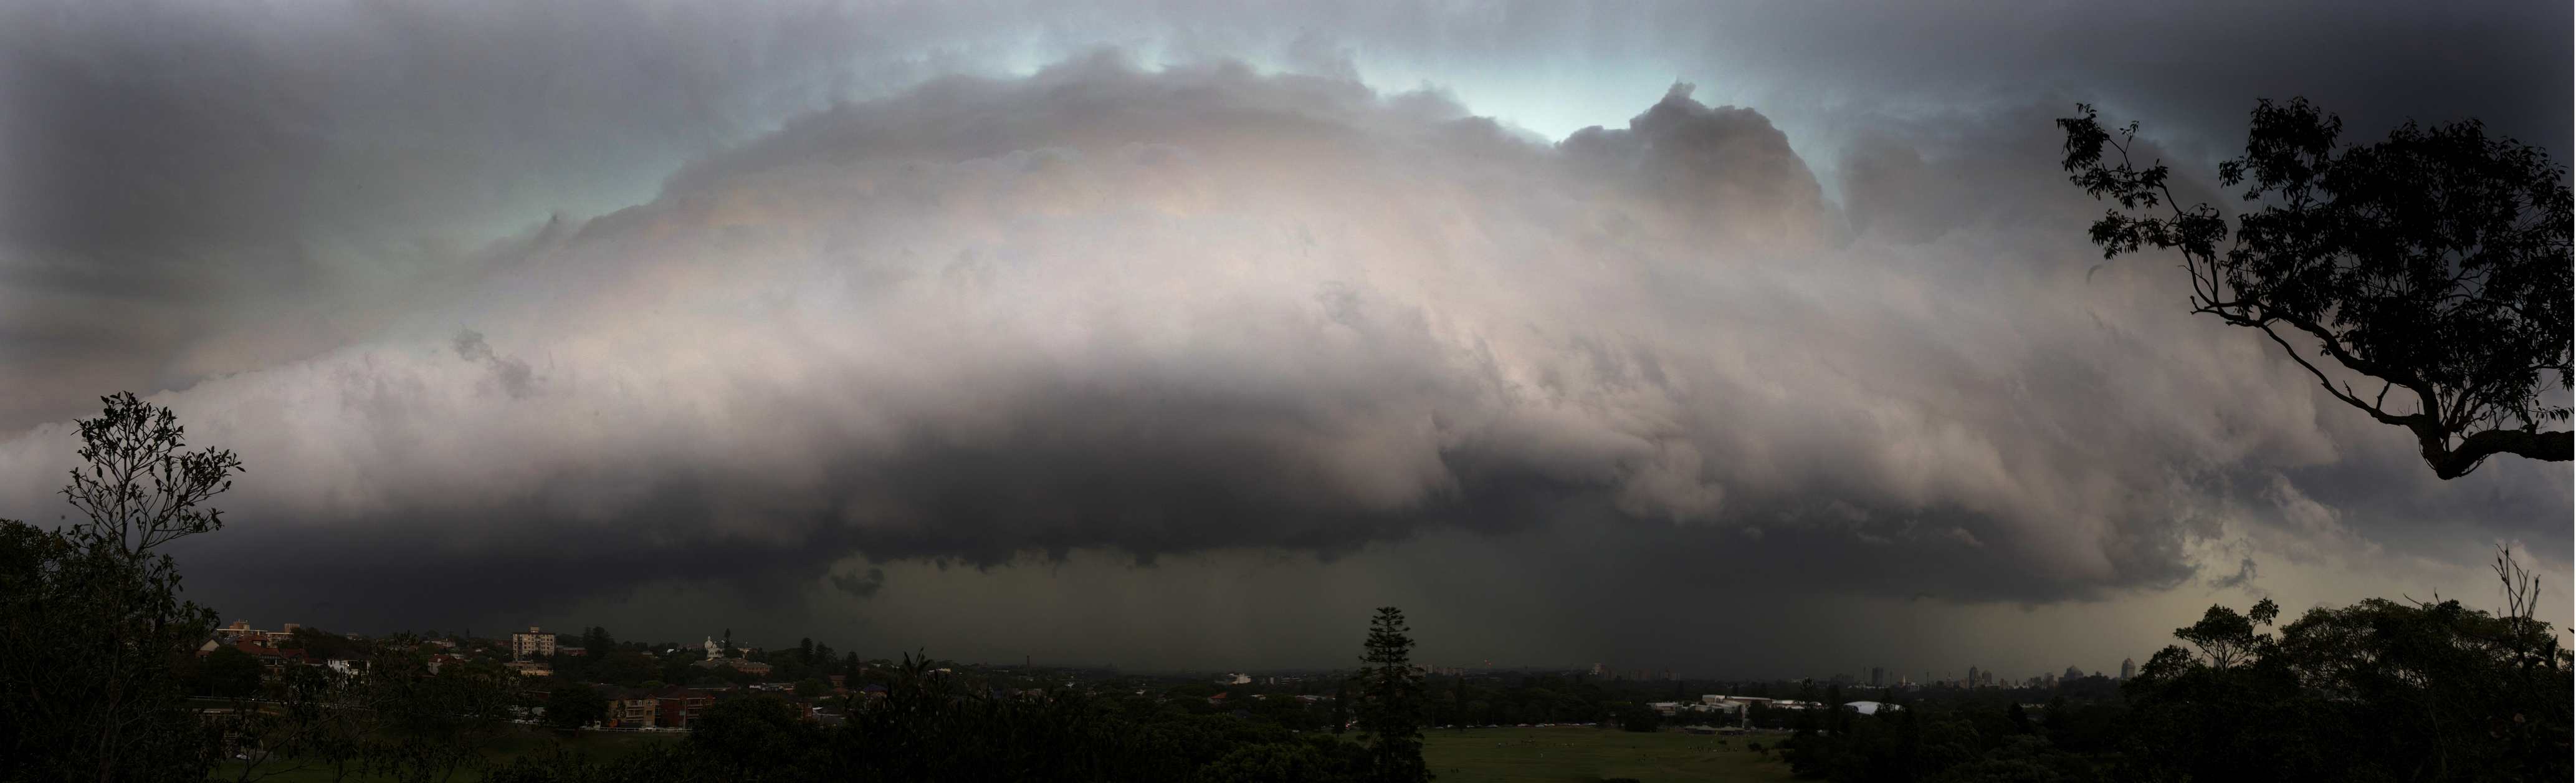 Severe storms NSW 8 Nov 2011